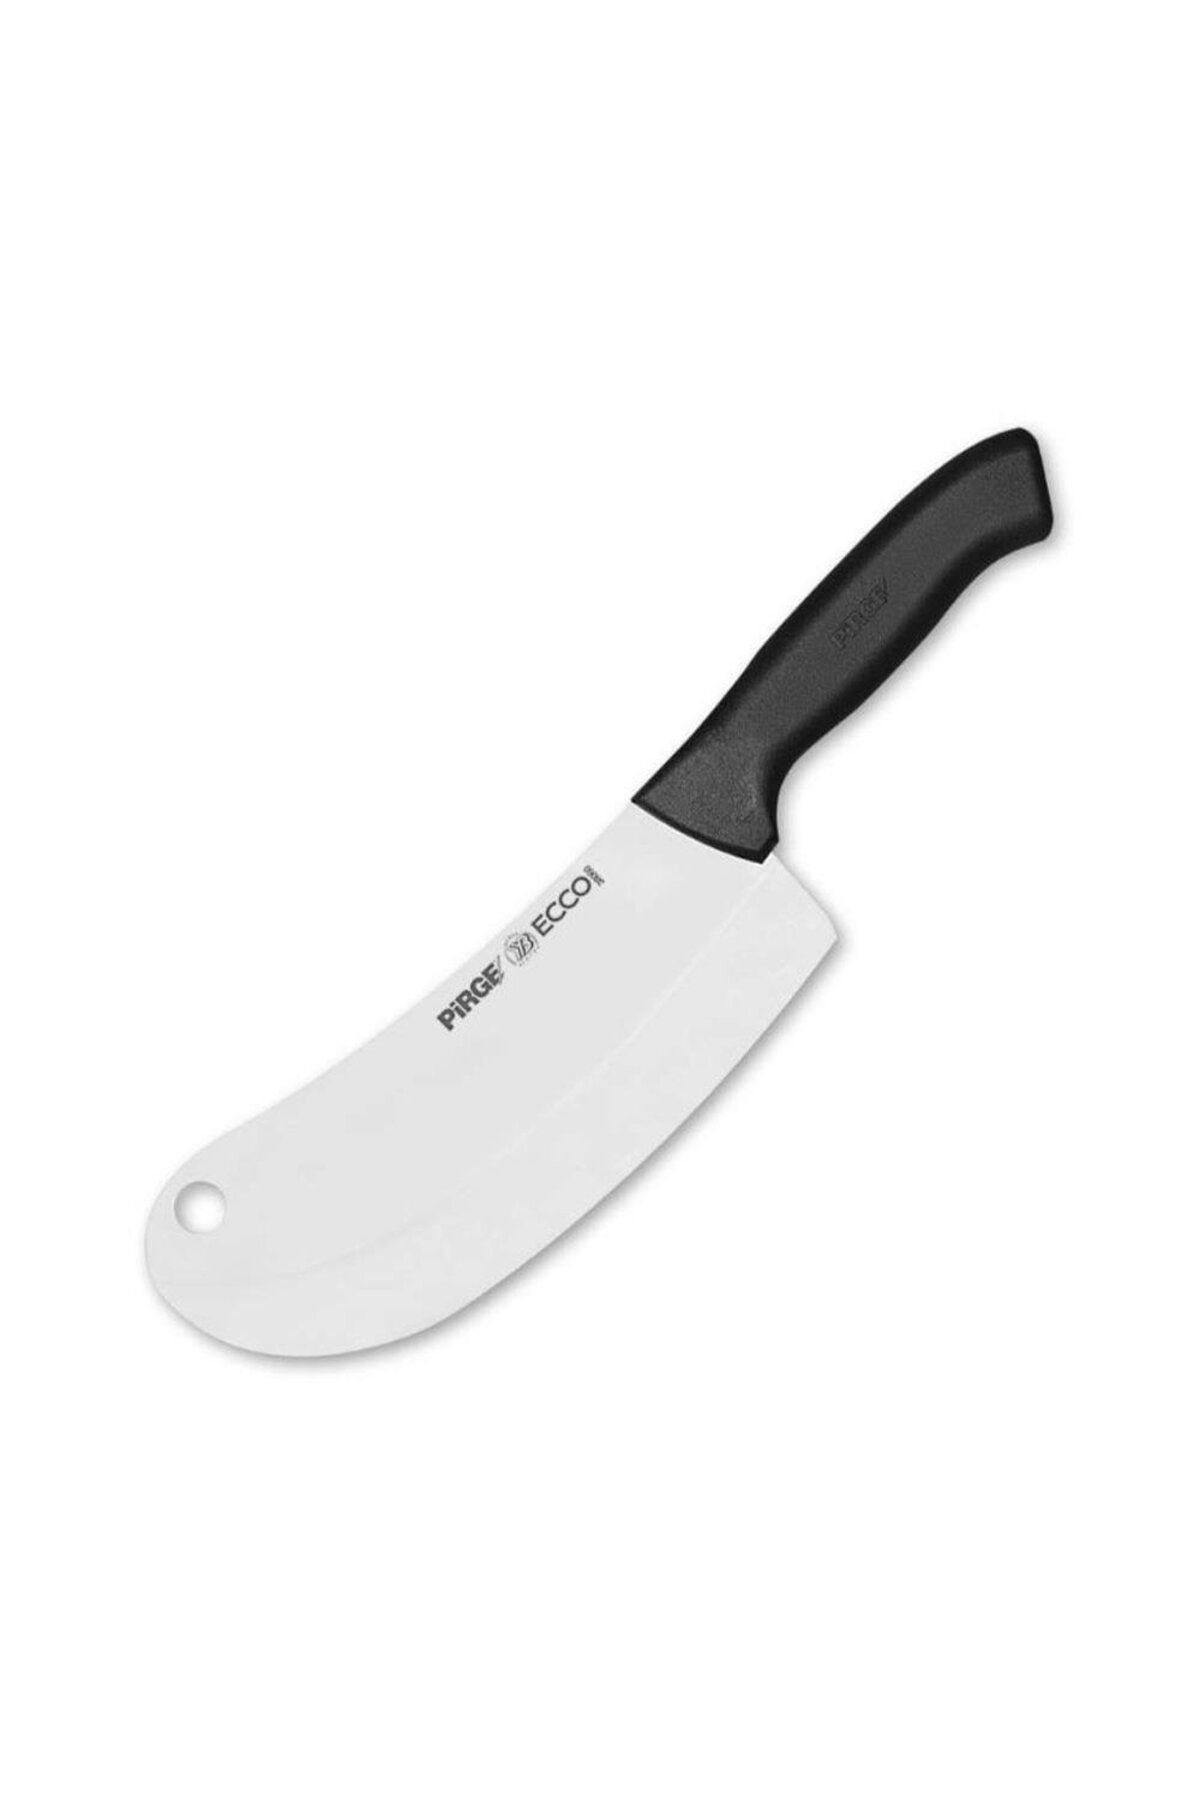 Pirge Ecco Soğan Bıçağı 19 Cm - 38060